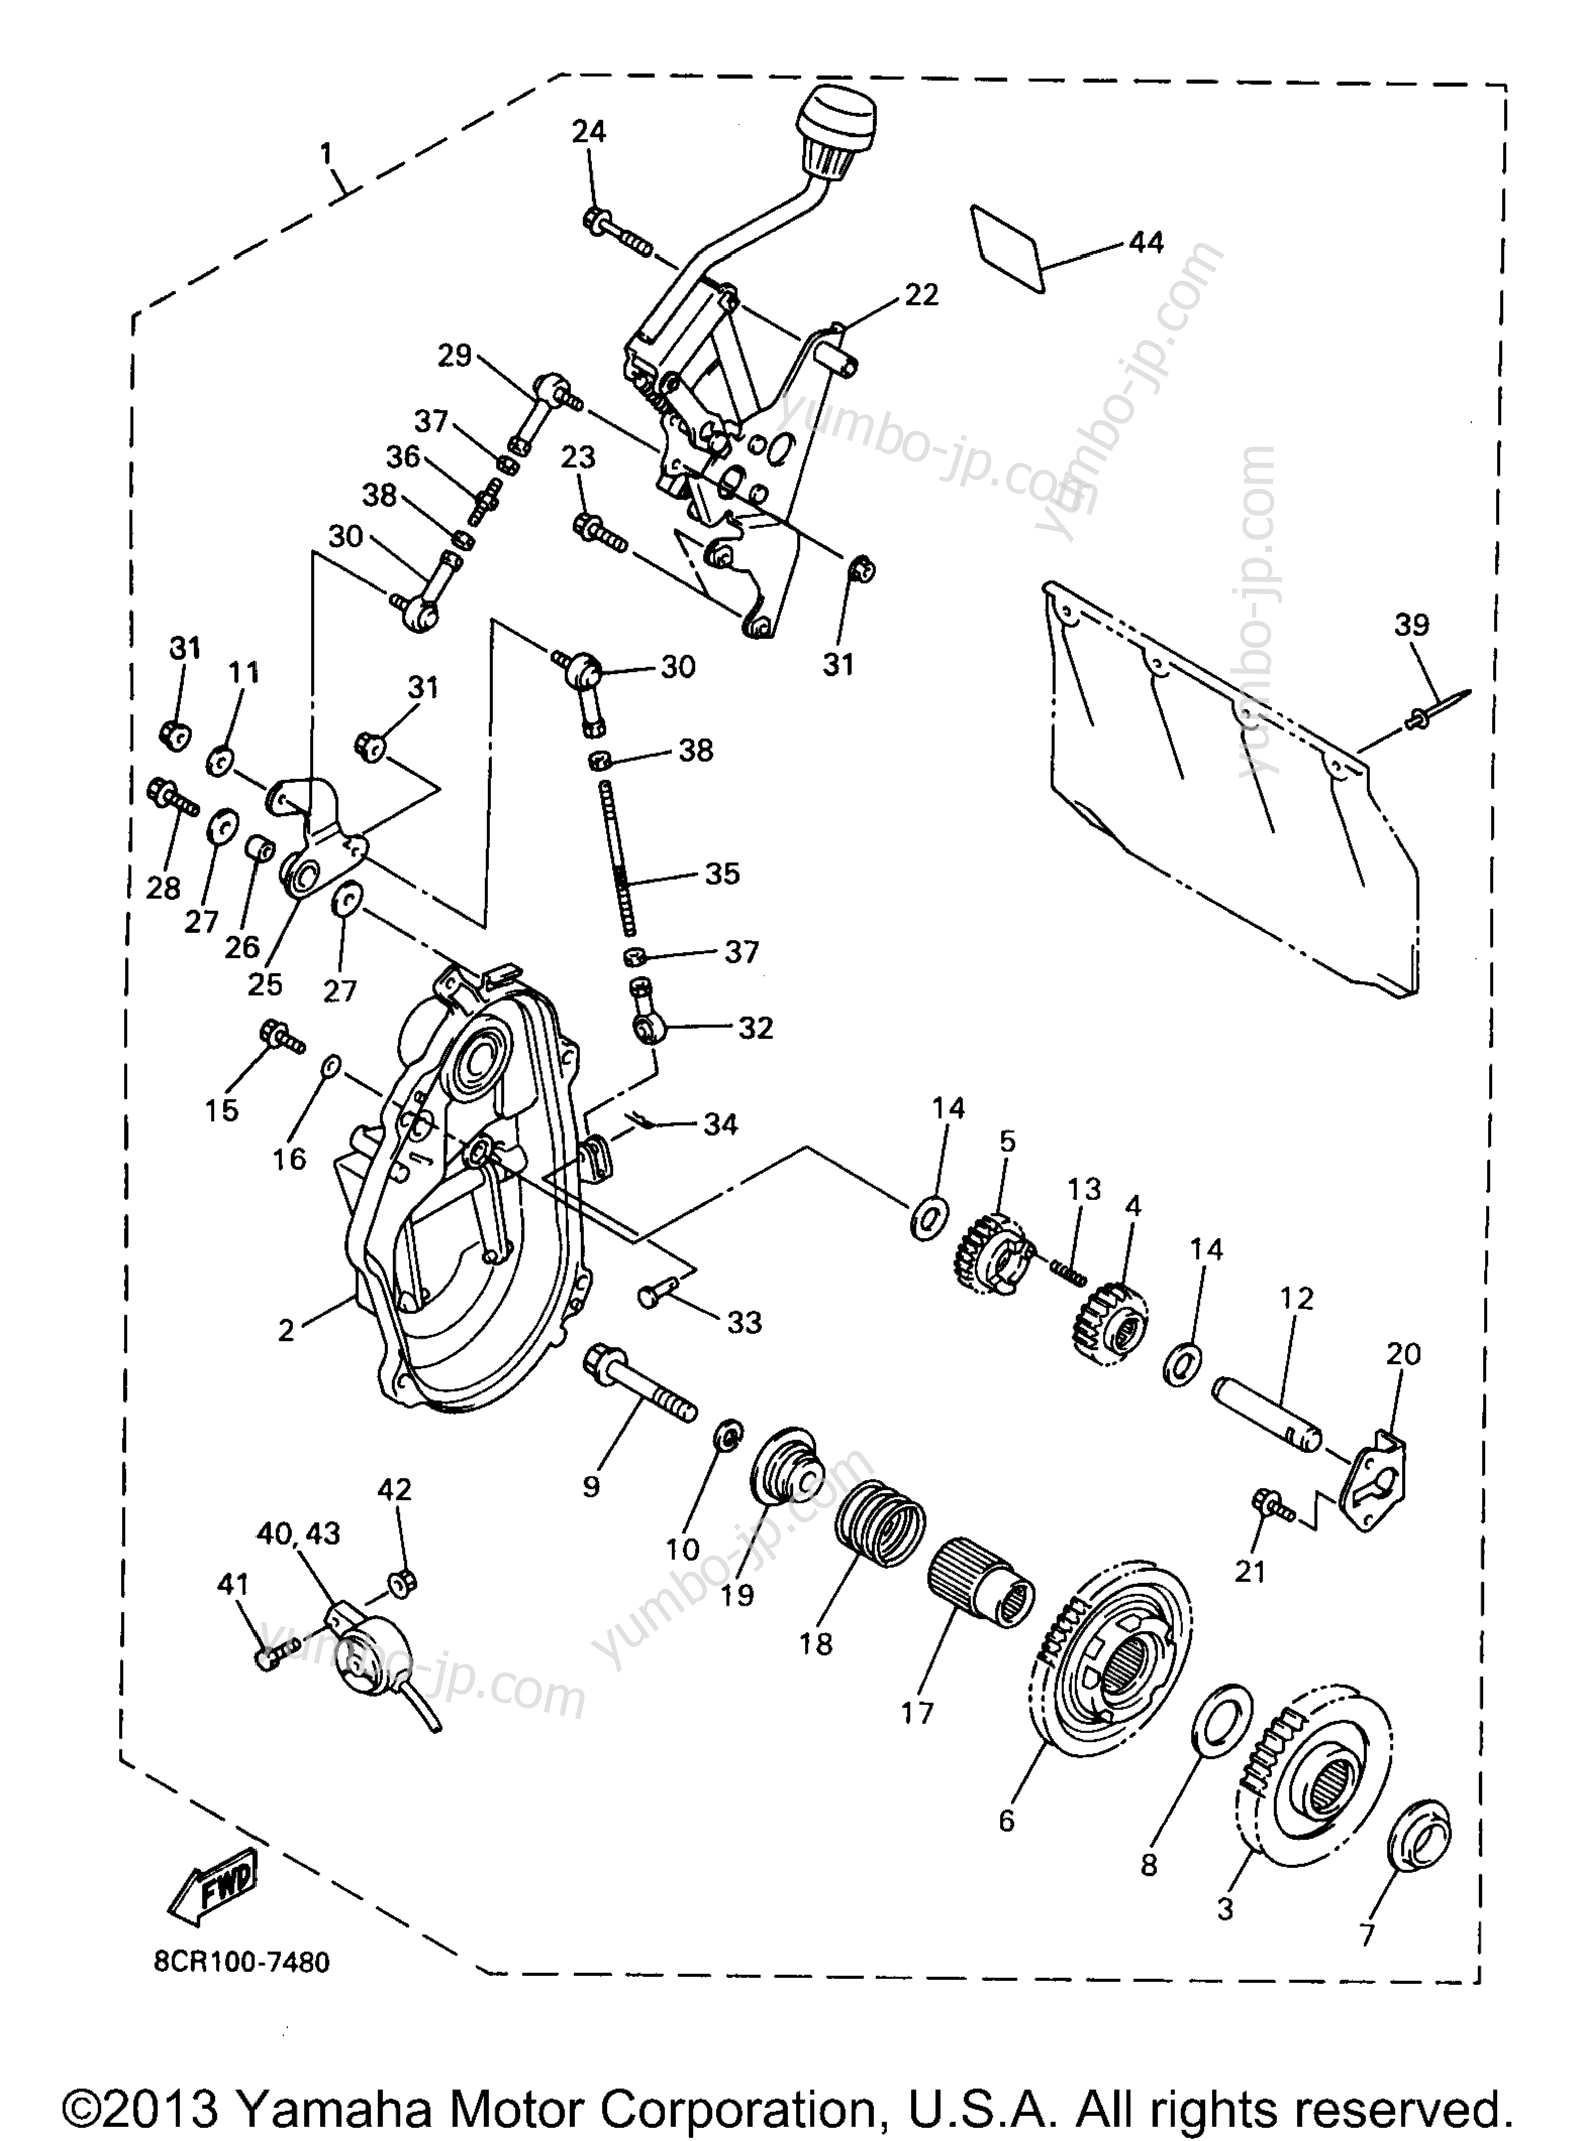 Alternate Reverse Gear Kit for snowmobiles YAMAHA VMAX 500 XTC (VX500XTCA) 1997 year